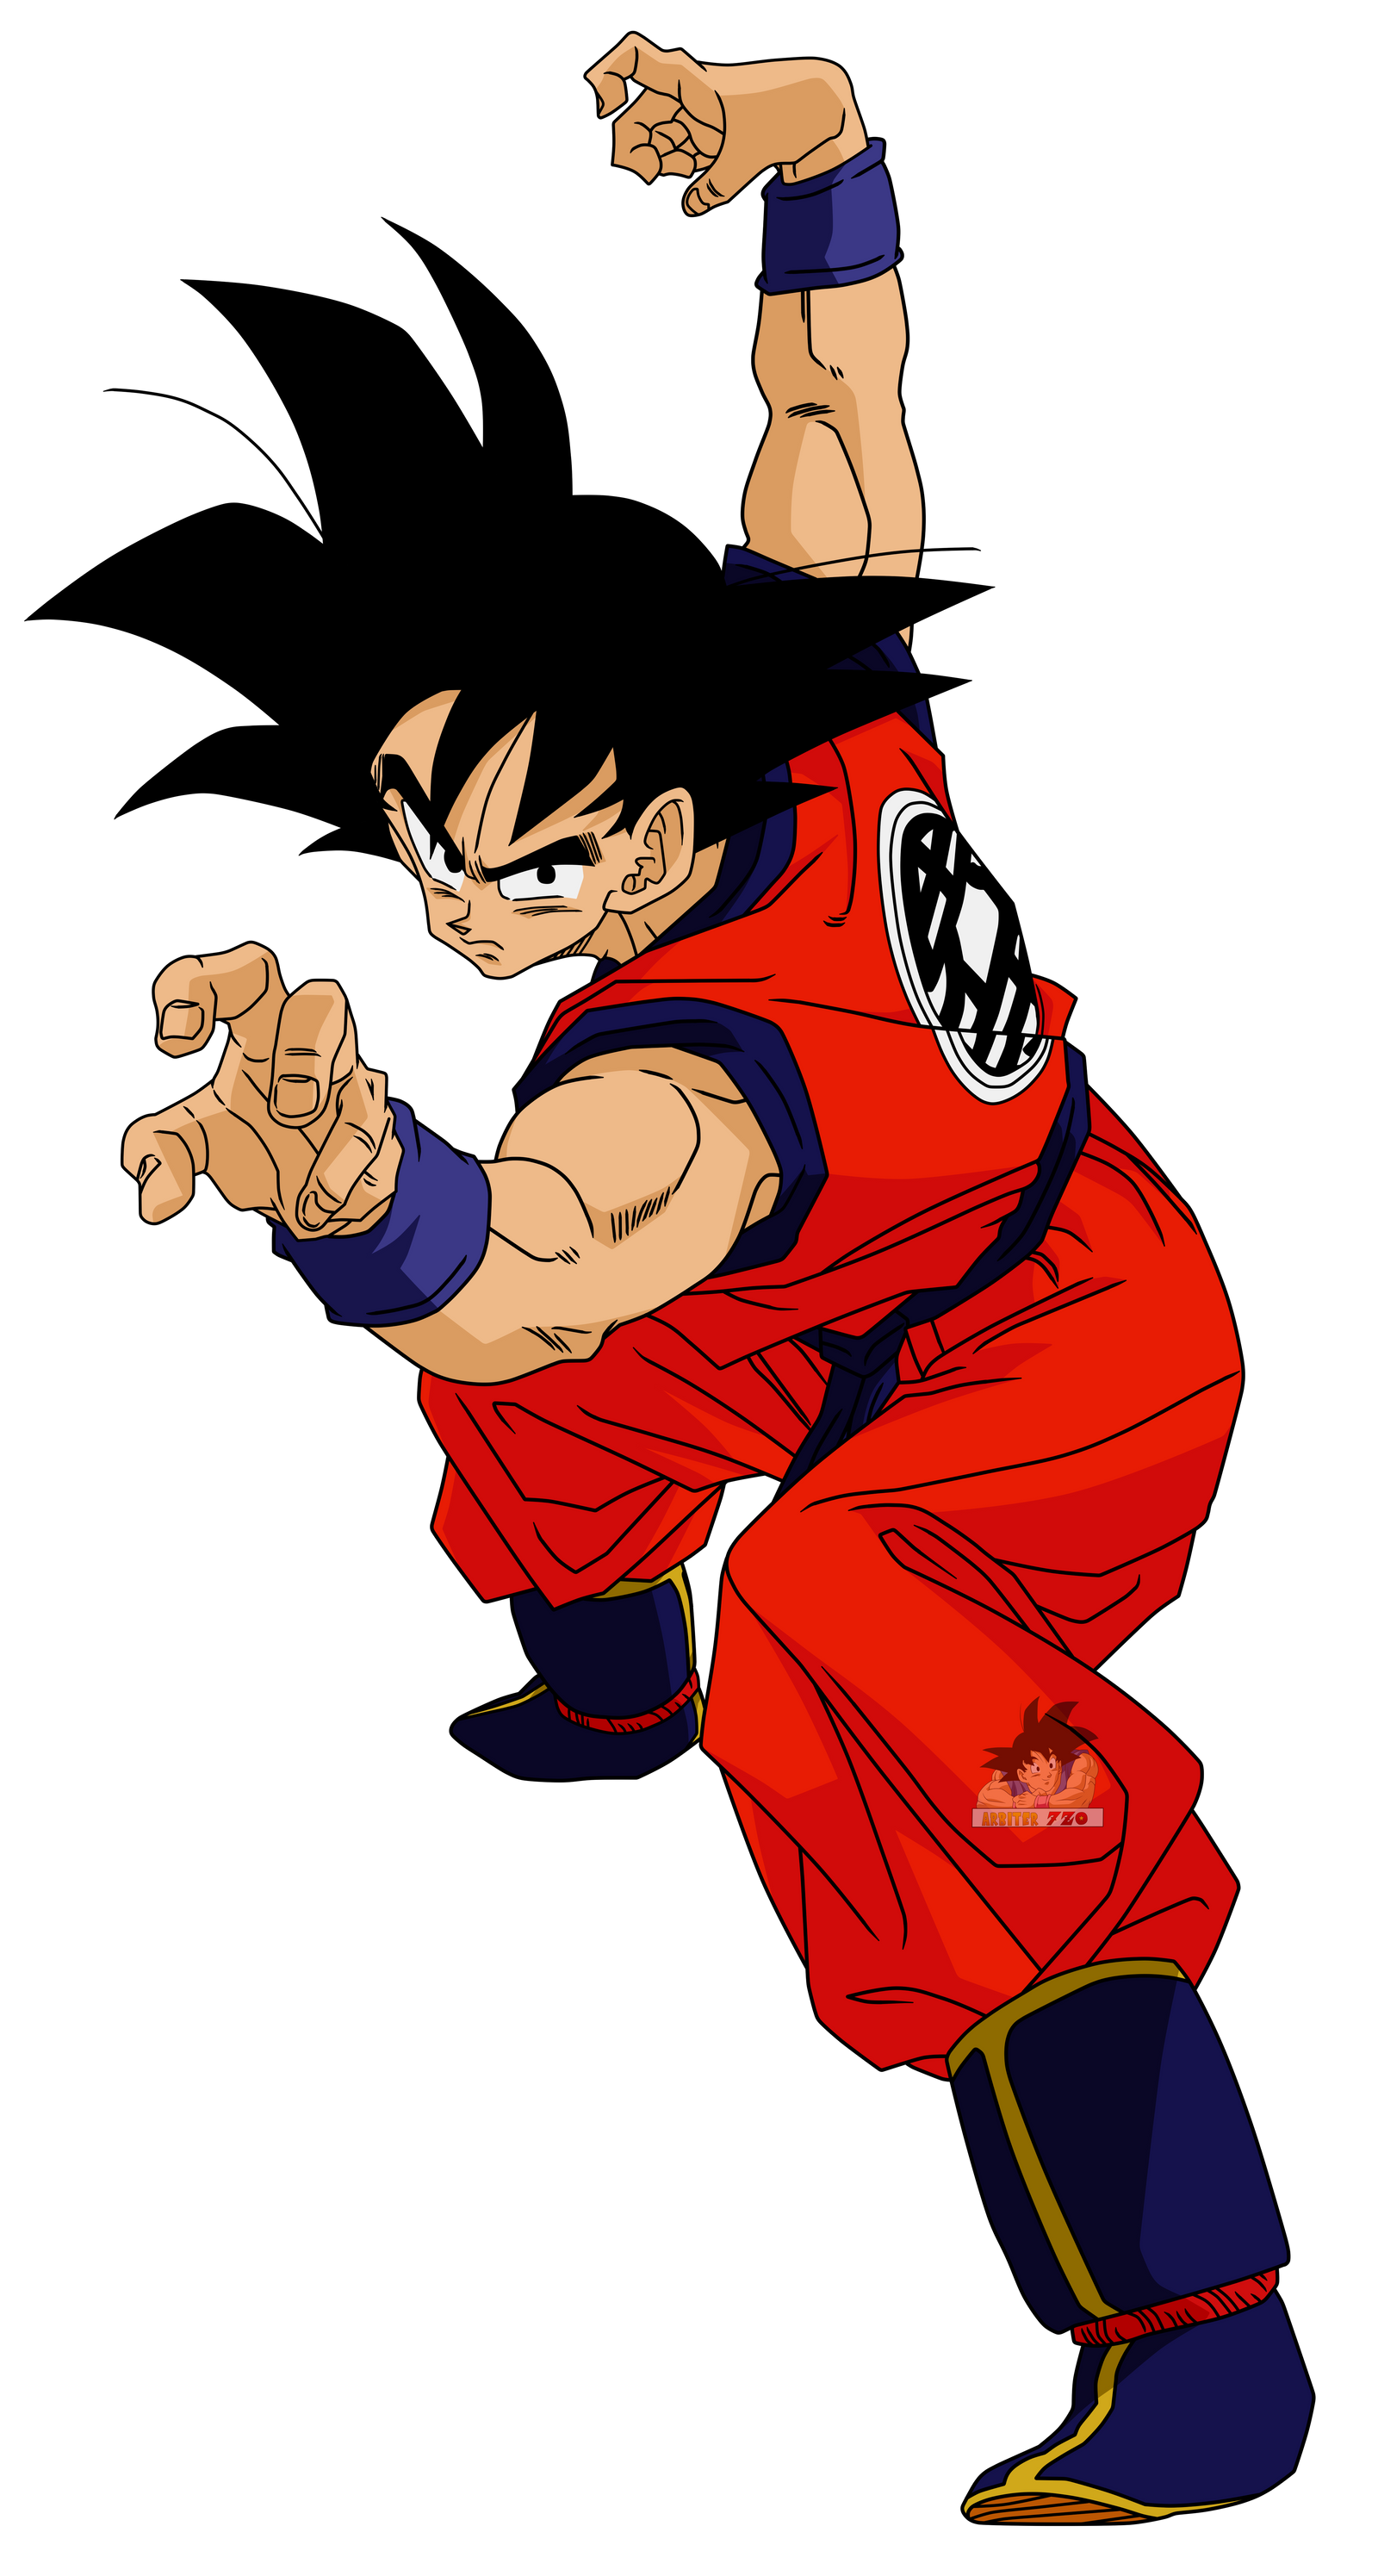 Goku Super Saiyajin 3 by arbiter720 on DeviantArt  Anime dragon ball super,  Dragon ball art goku, Dragon ball super manga